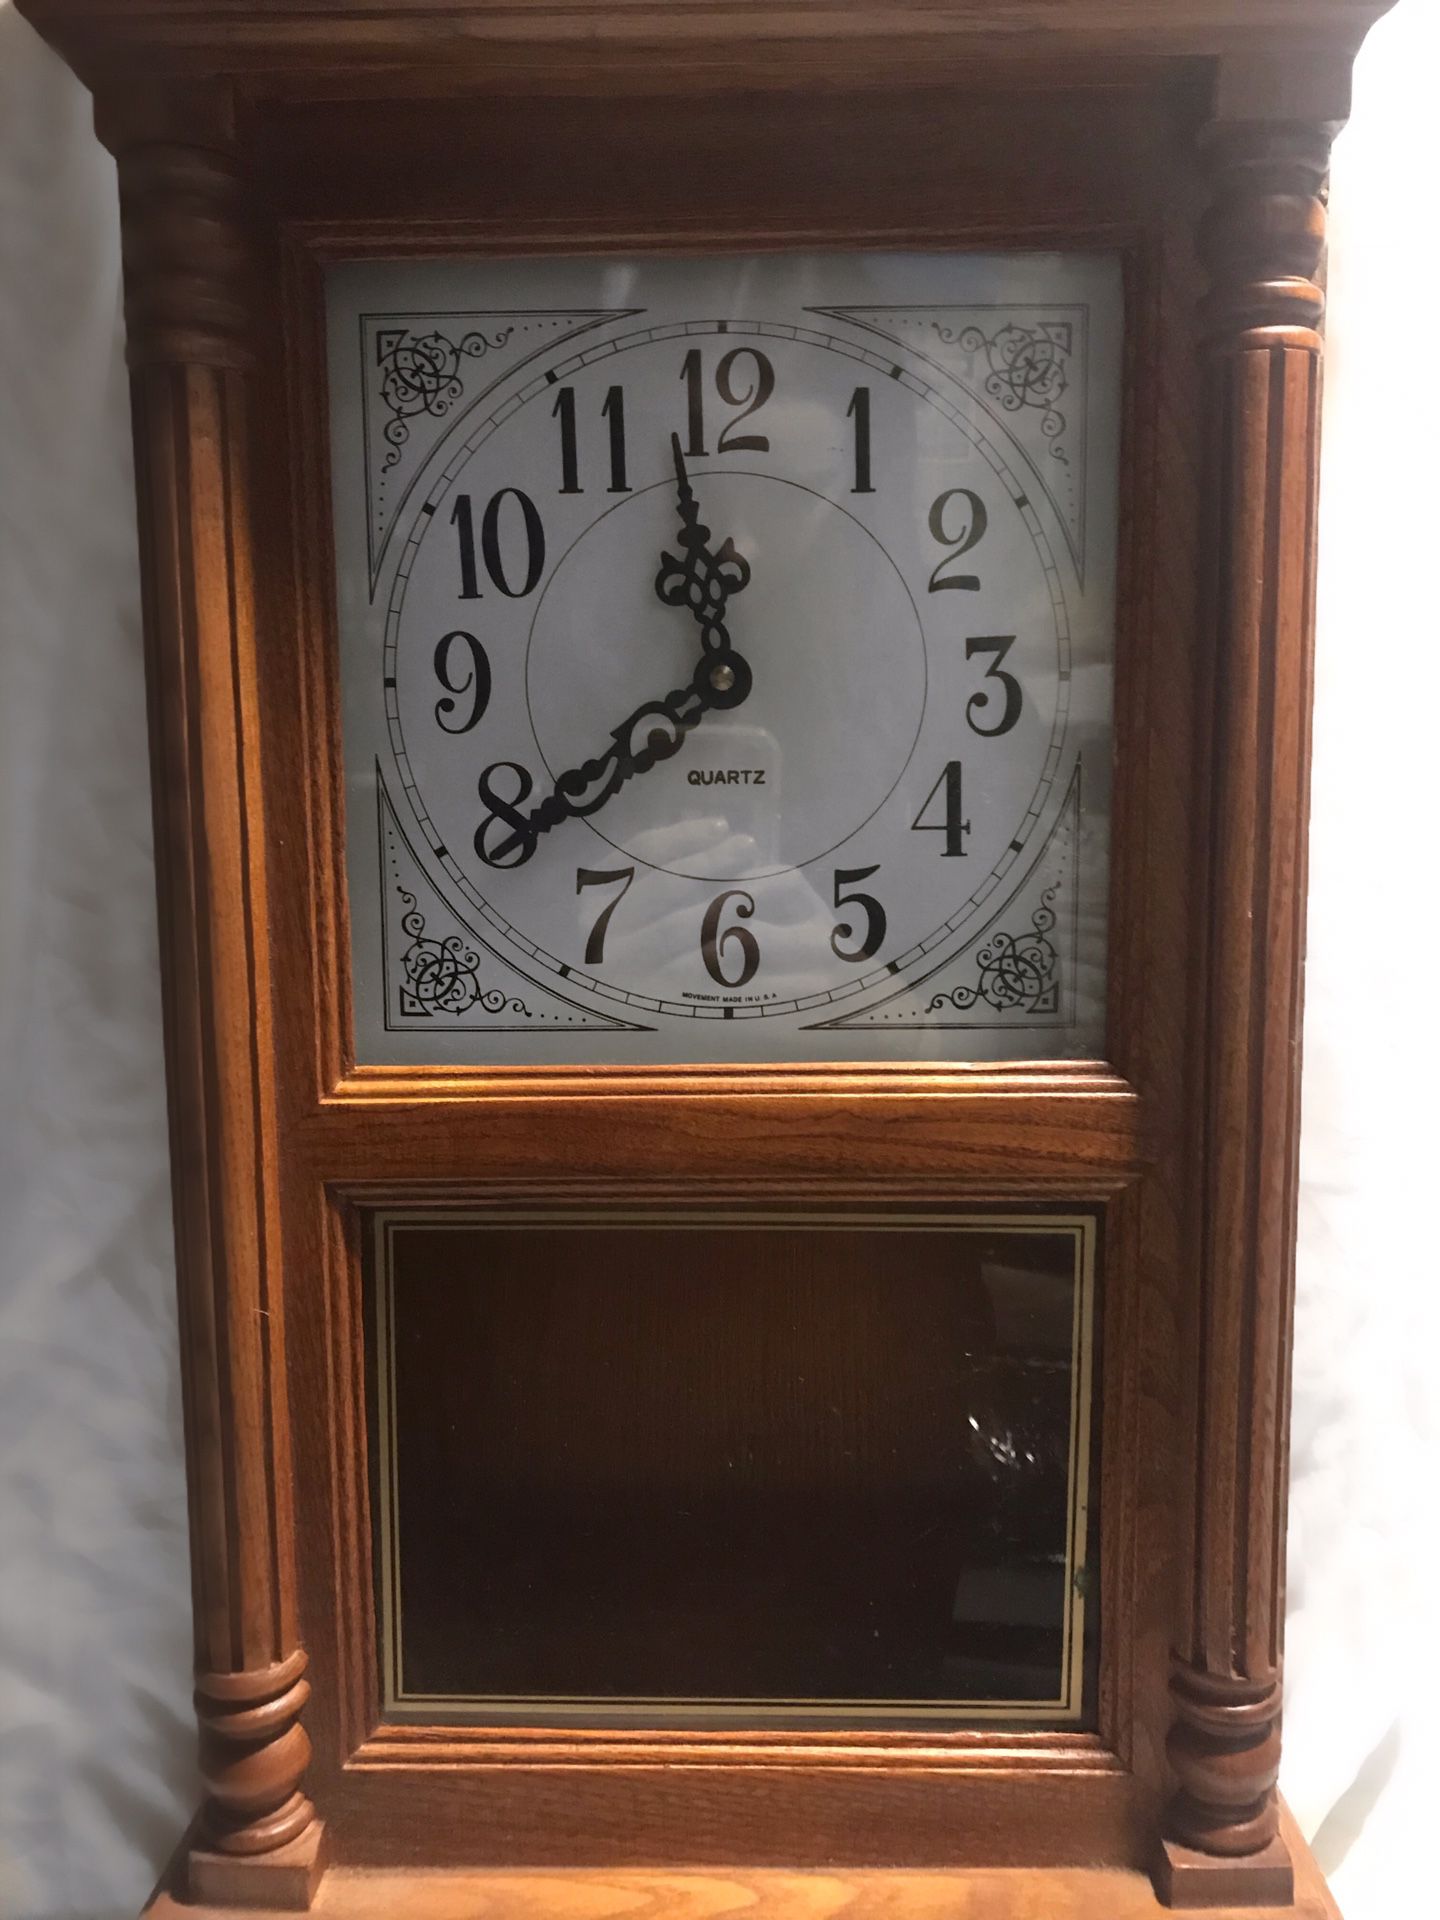 Quartz Antique grandfather clock